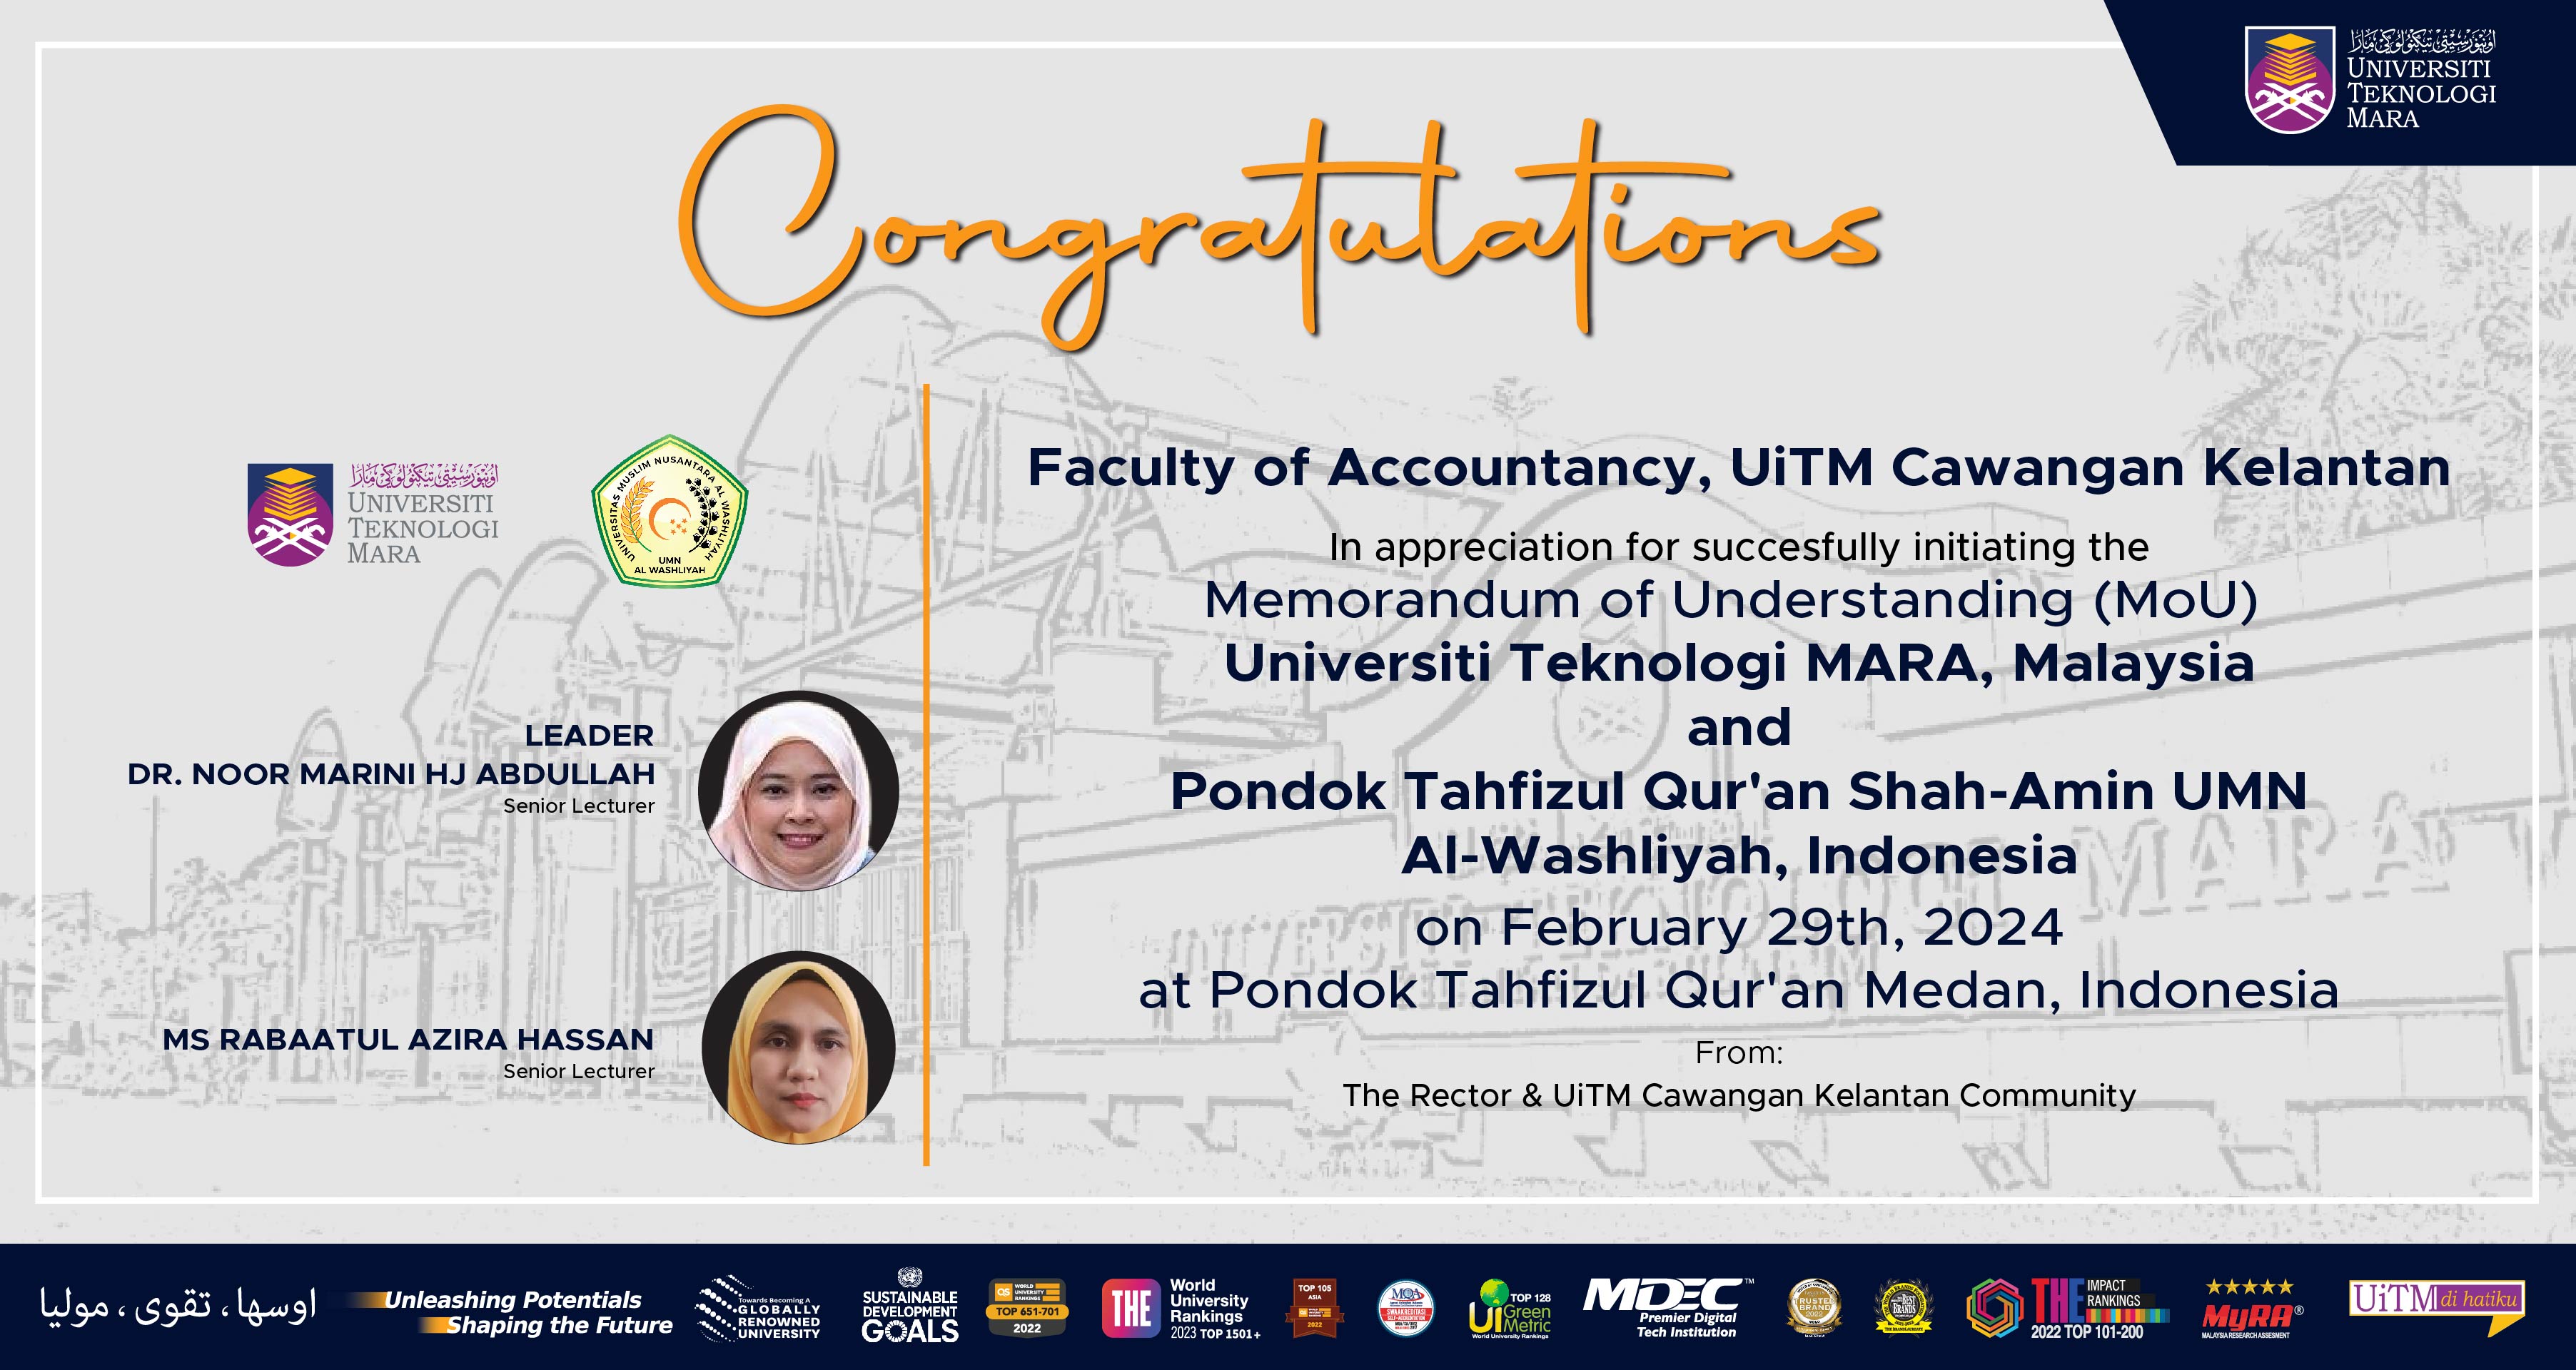 Congratulations!!! Dr Noor Marini Hj Abdullah and Puan Rabaatul Azira Hassan, Faculty of Accountancy, MoU Between UiTM, Malaysia and Pondok Tahfizul Qur'an Shah-Amin UMN Al-Washliyah, Indonesia